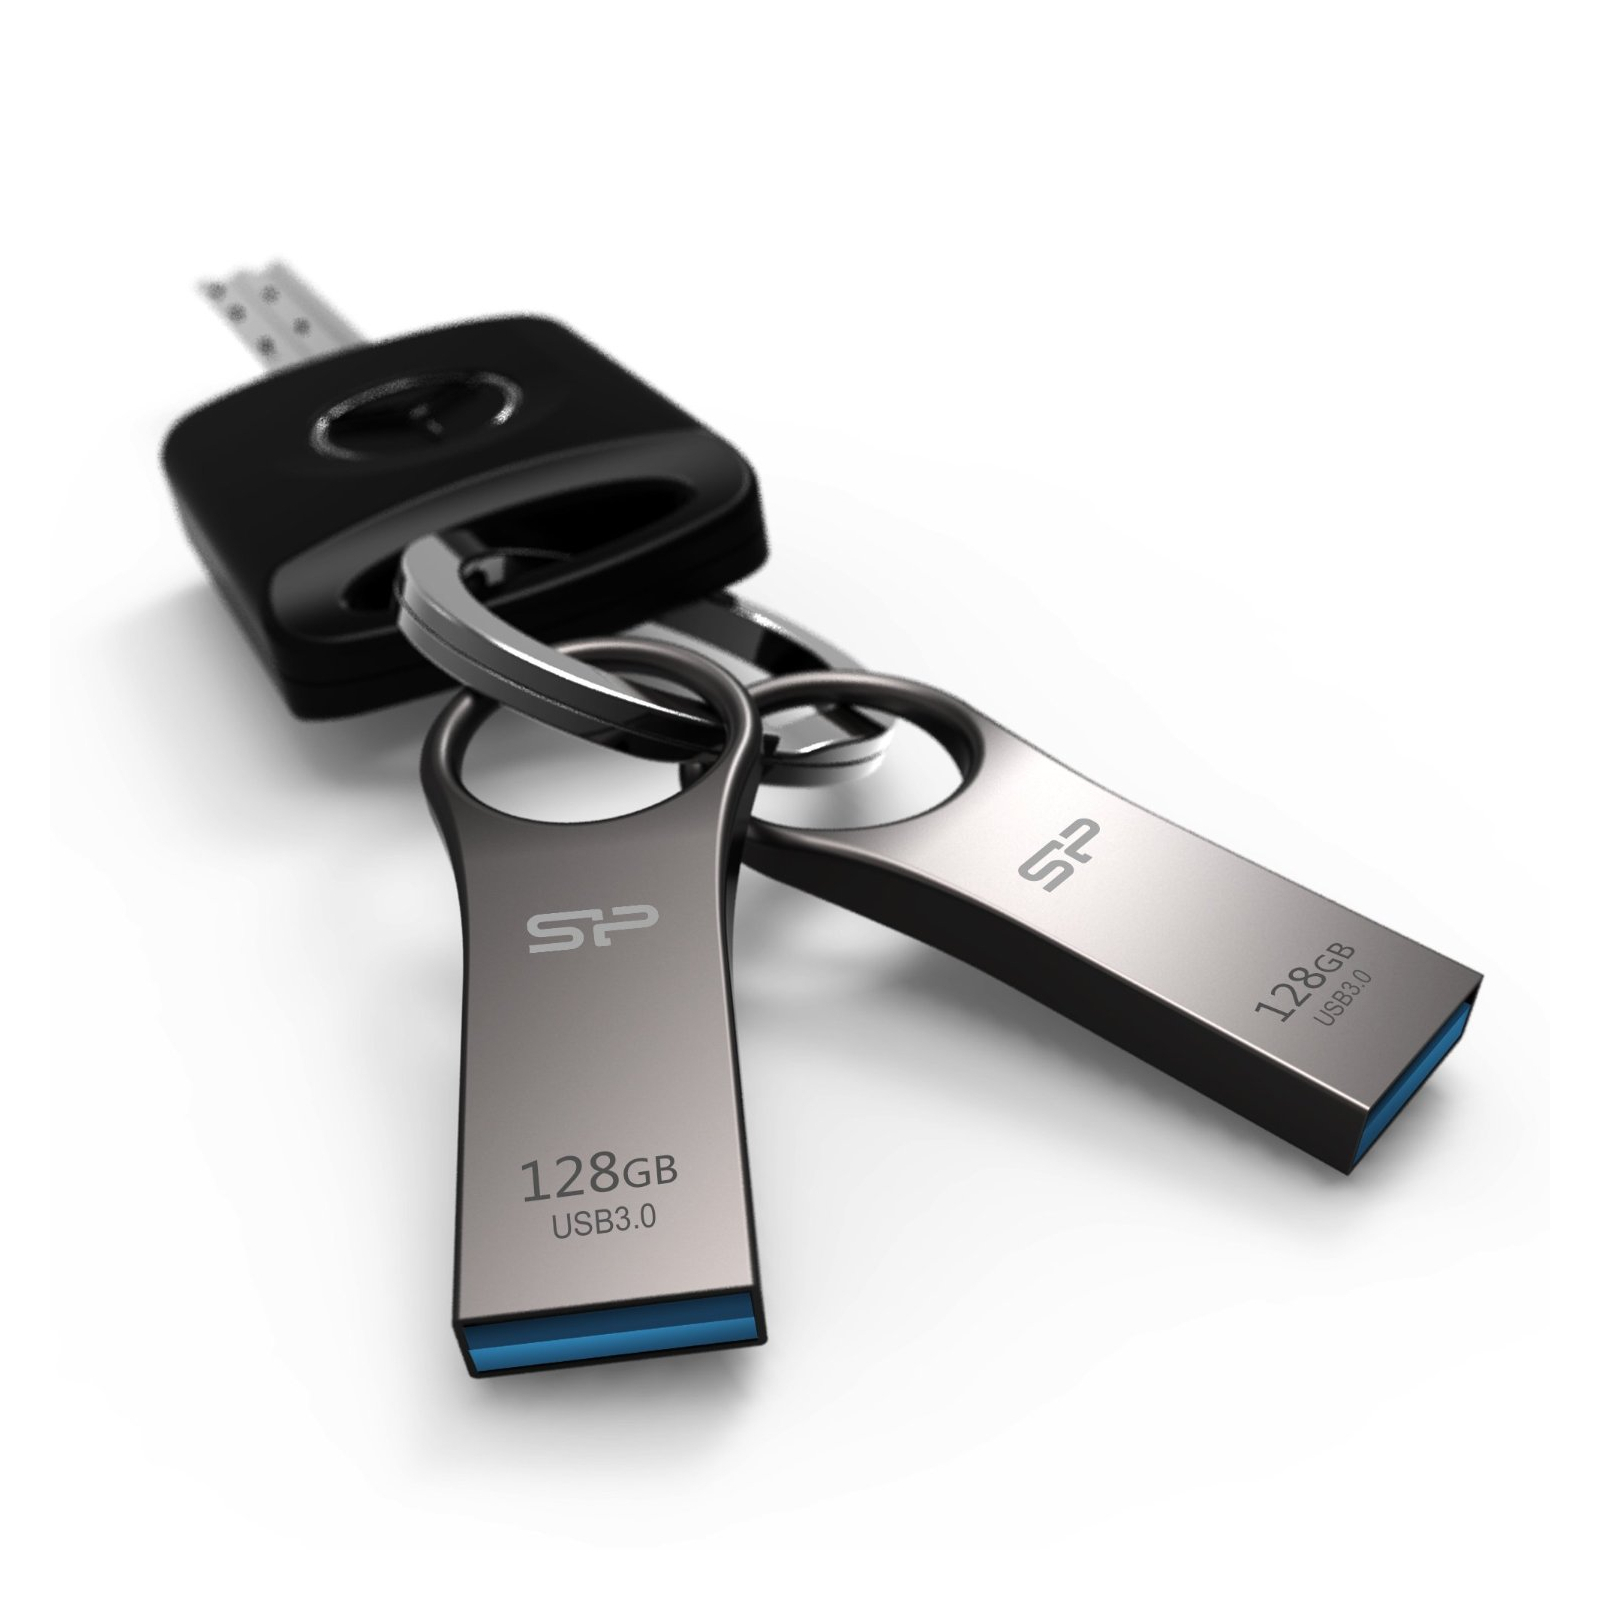 USB флеш накопитель Silicon Power 16GB JEWEL J80 USB 3.0 (SP016GBUF3J80V1T) изображение 5